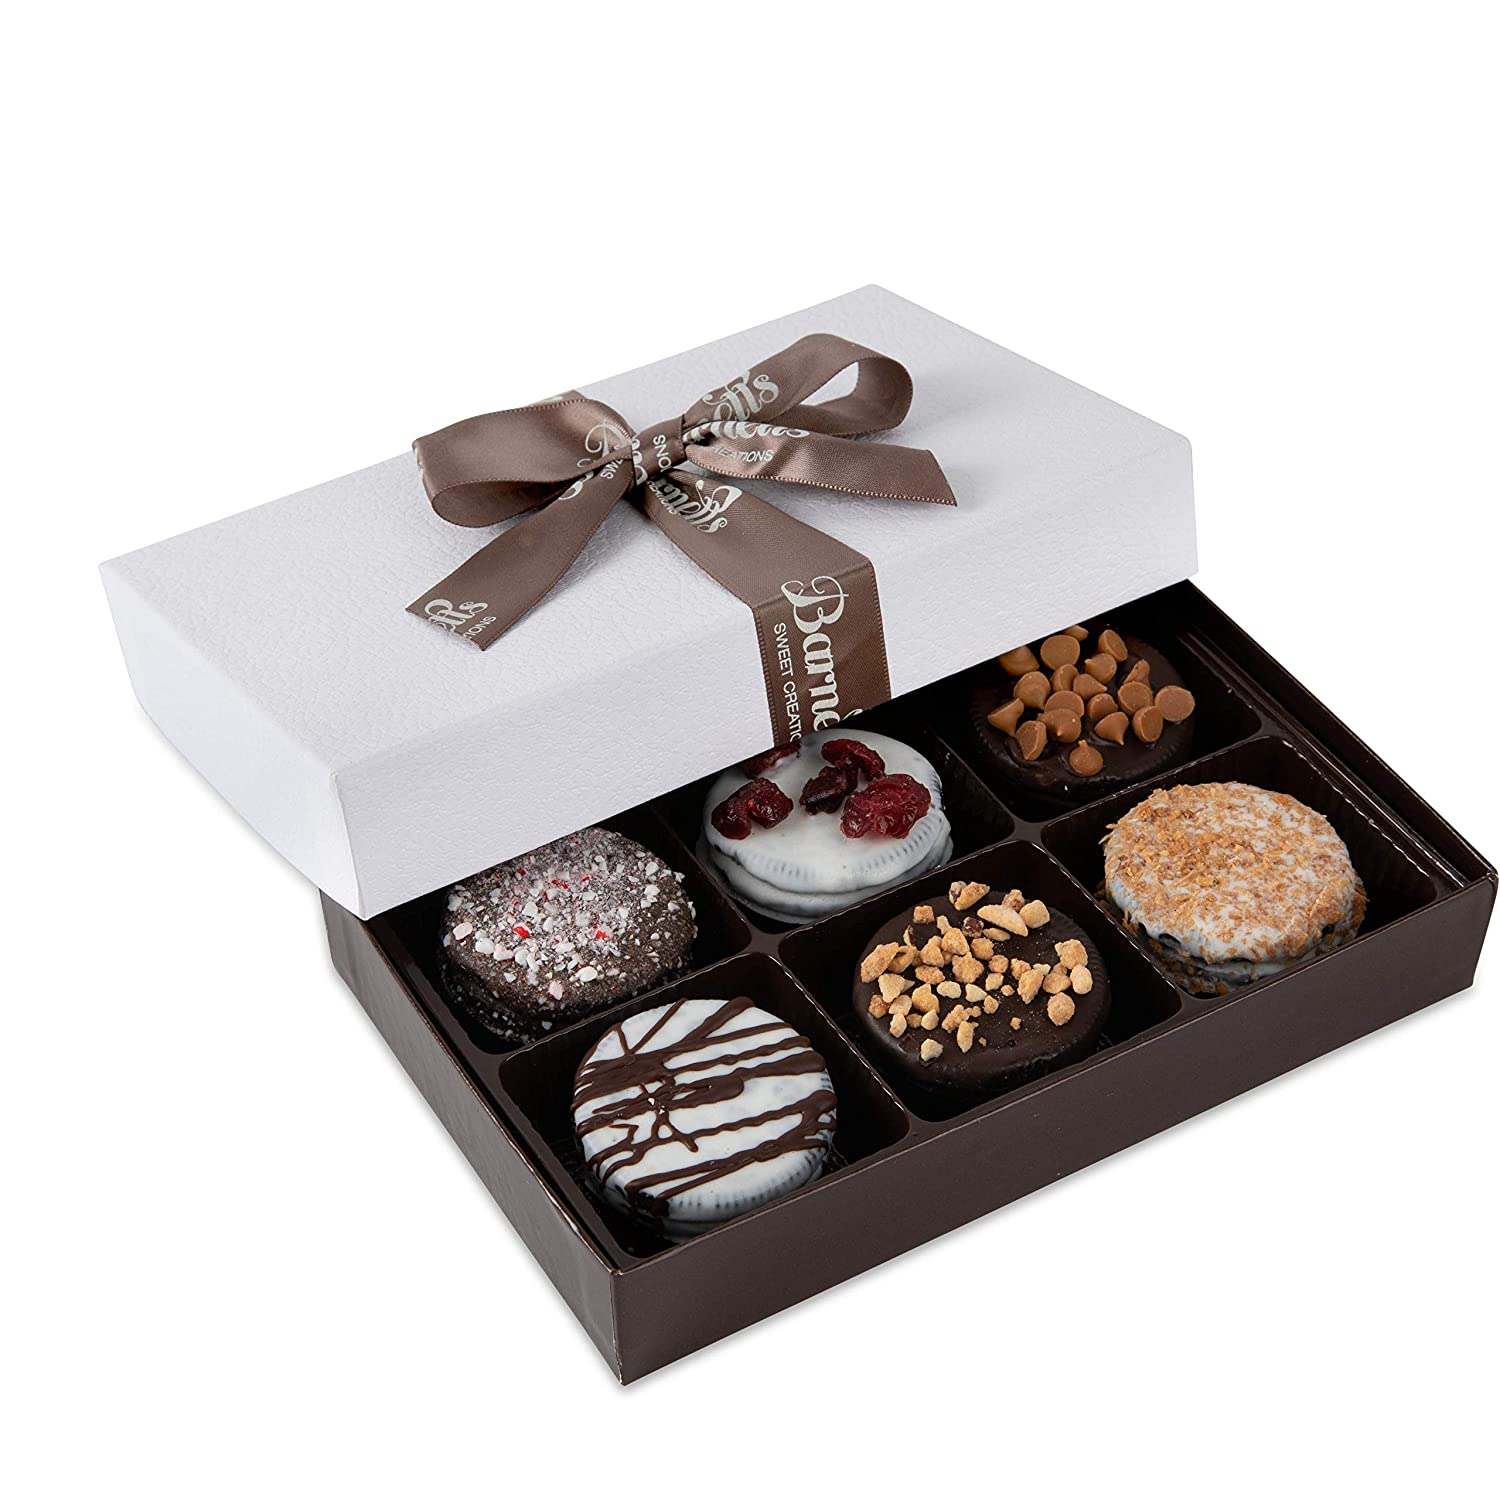 Barnett's Christmas Gifts, Chocolate Cookies Gift Box, 6 Count Sampler - image 1 of 6